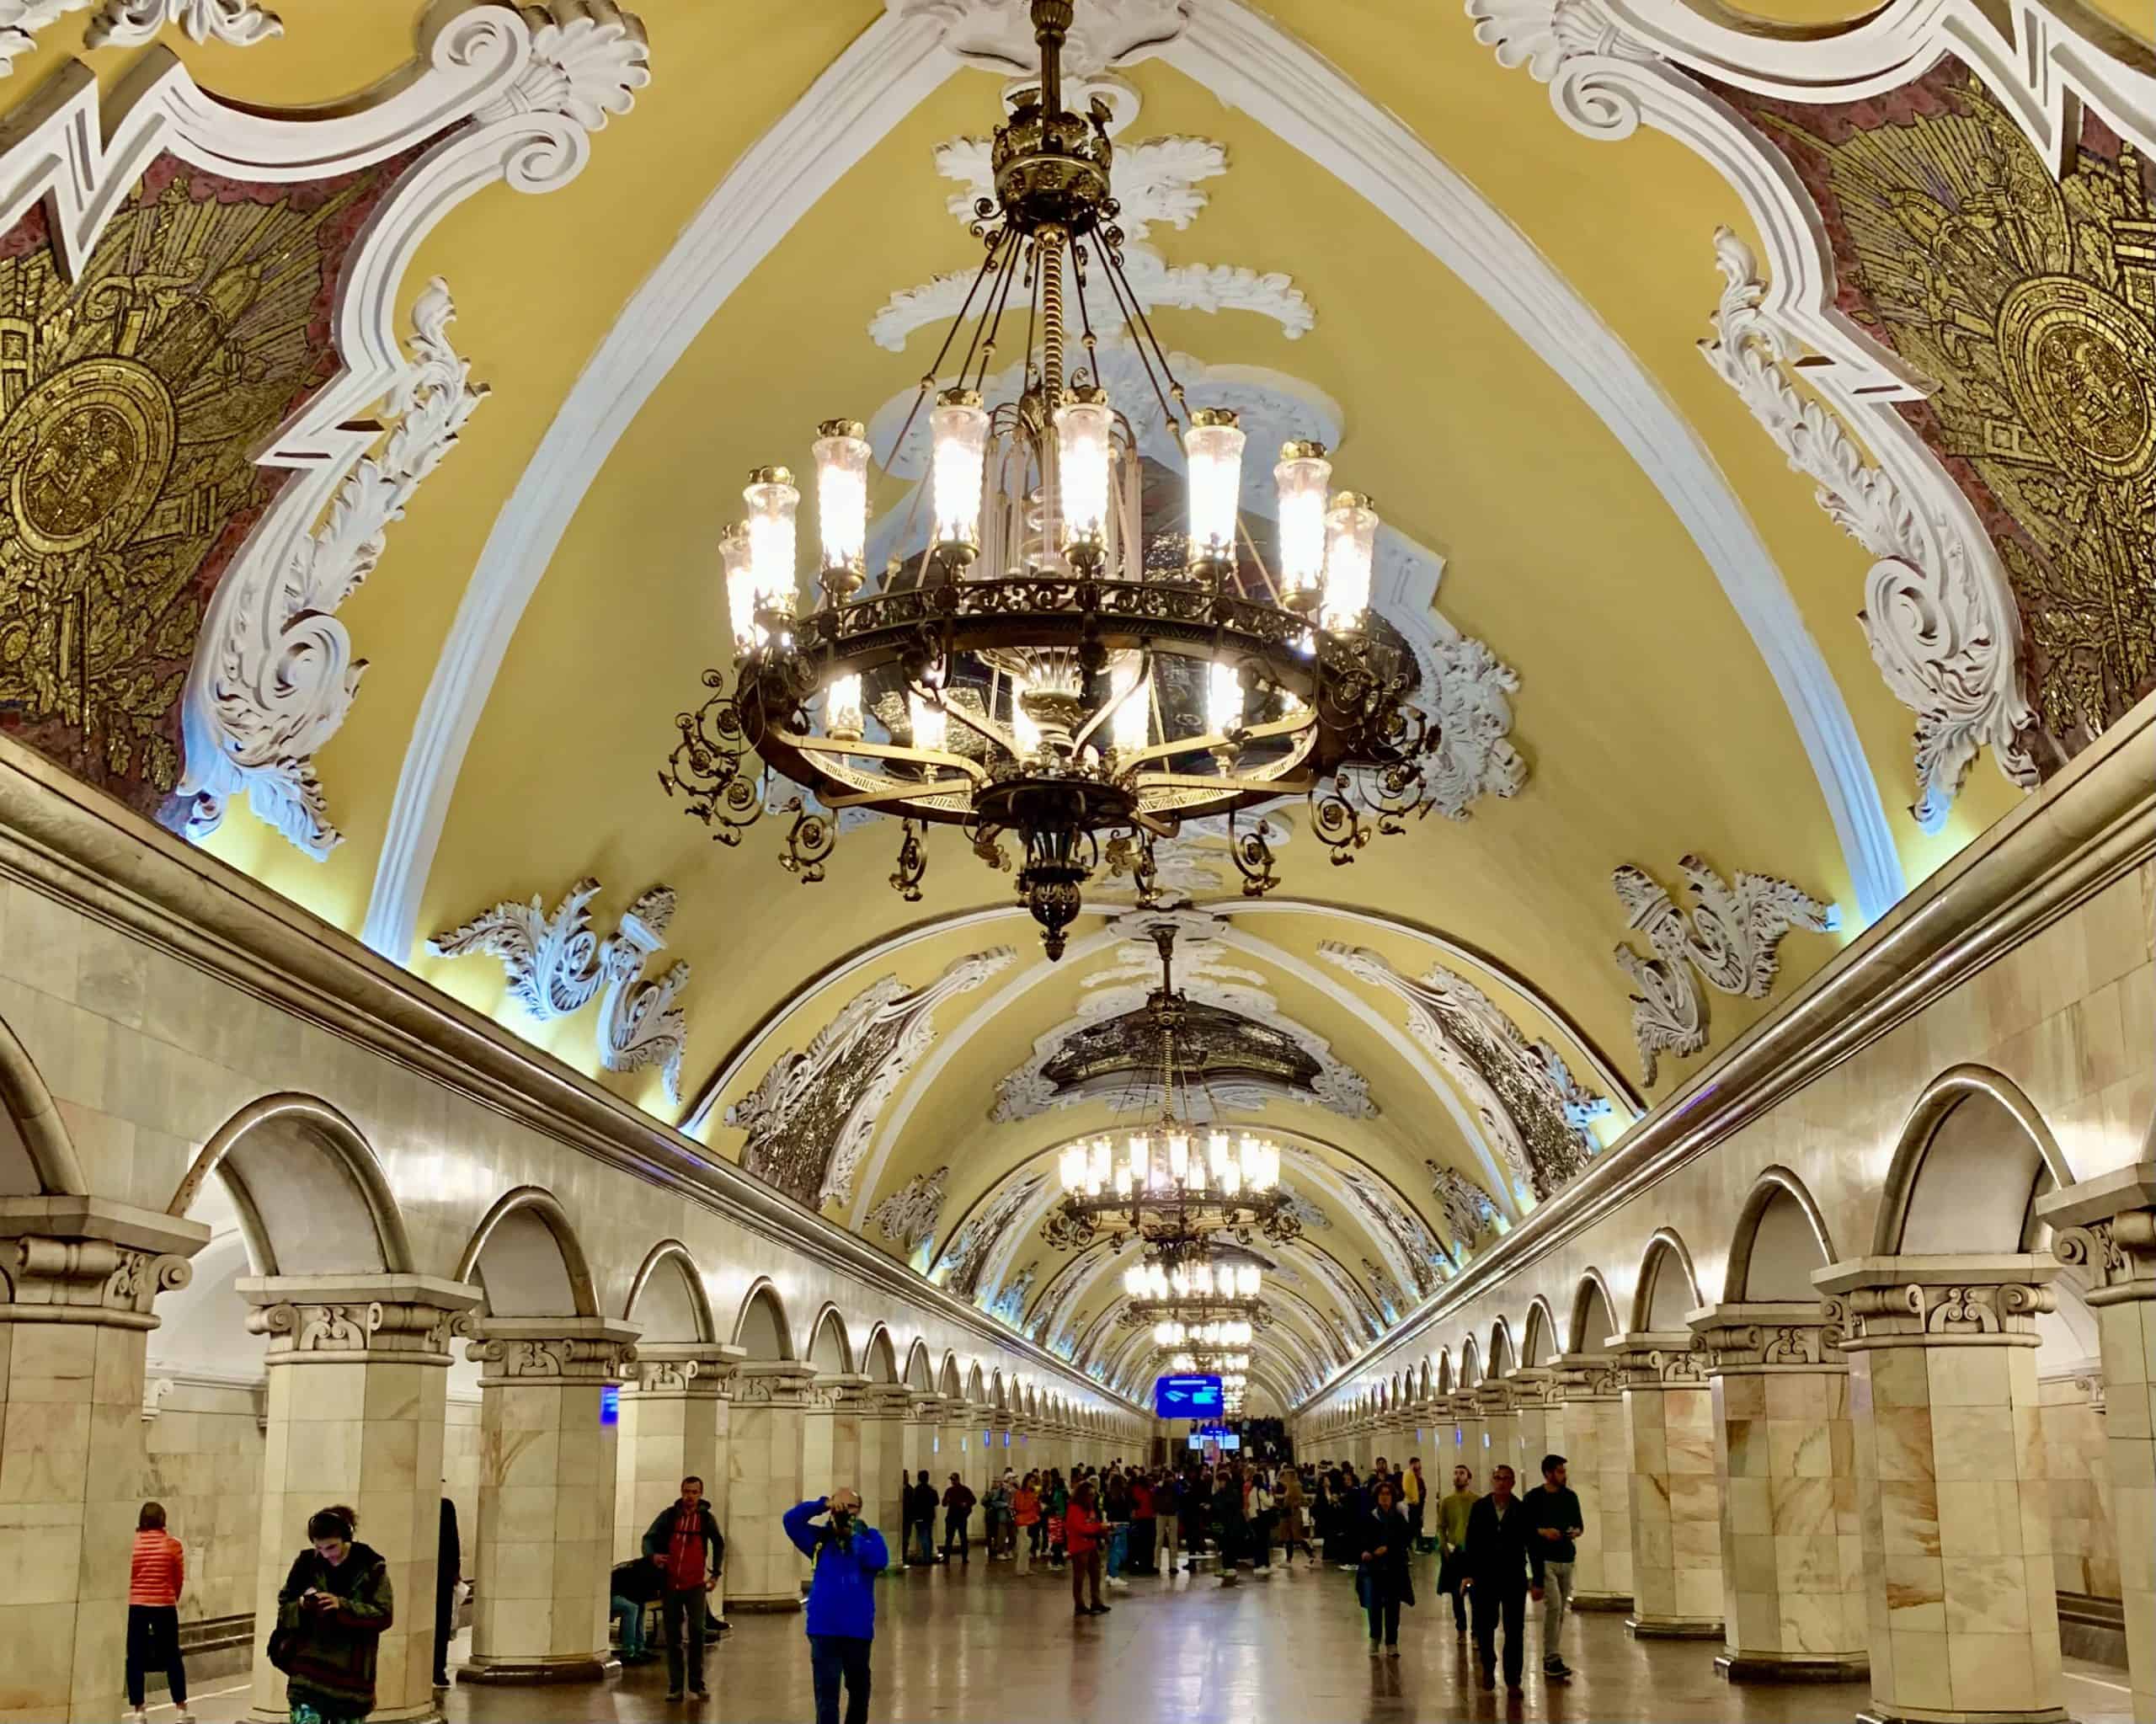 Komsomolskaya metro station with chandeliers